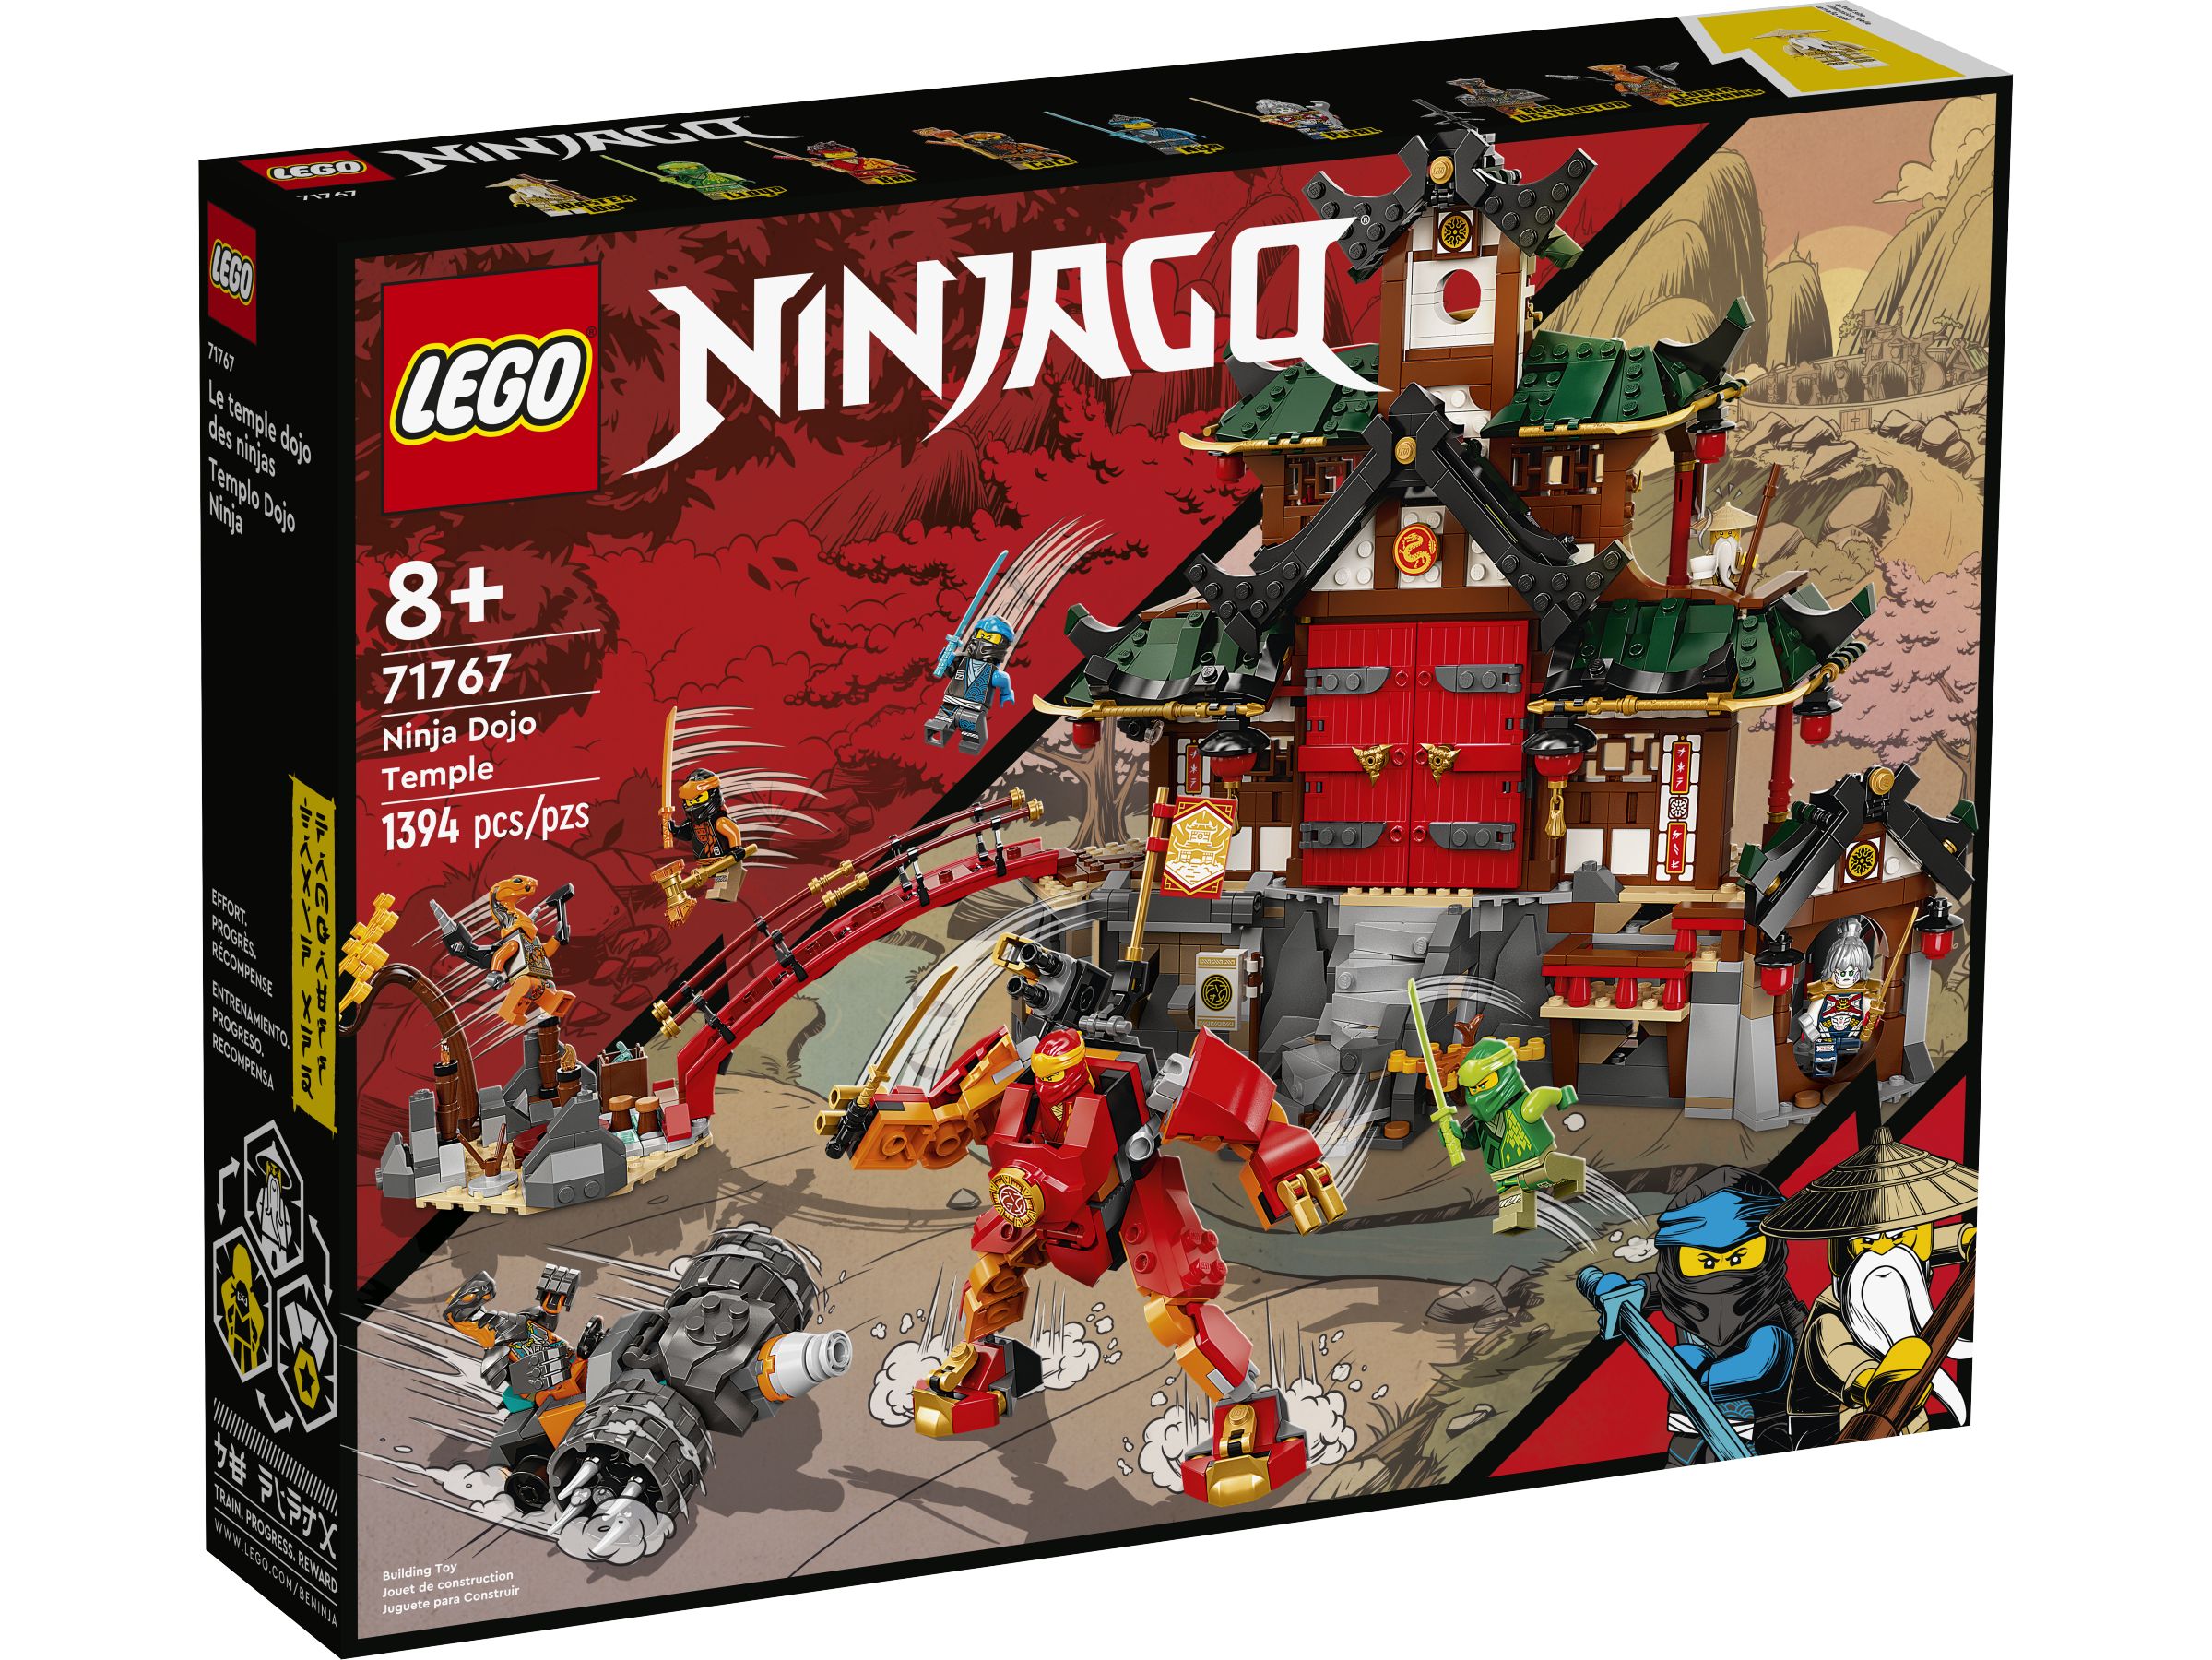 LEGO Ninjago 71767 Ninja-Dojotempel LEGO_71767_alt1.jpg